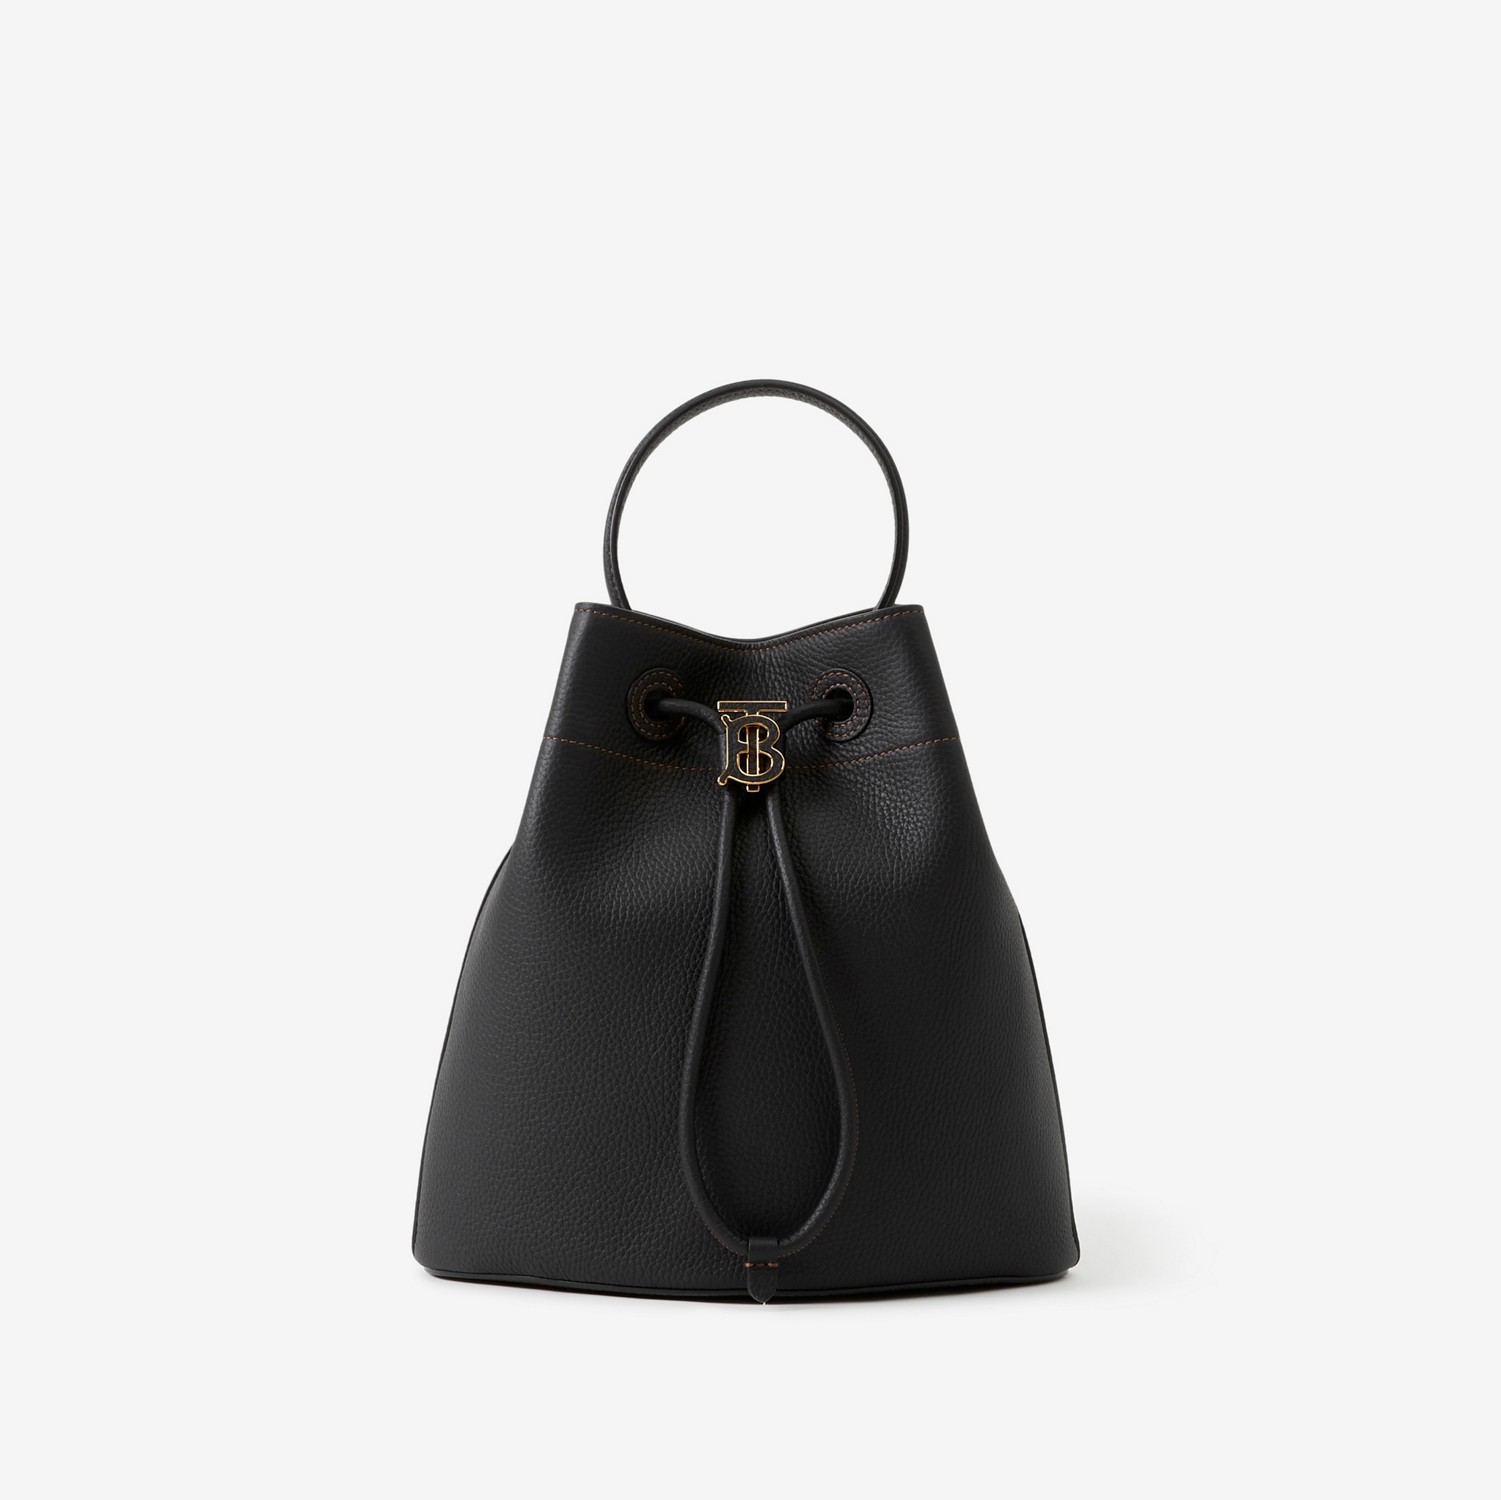 Small TB Bucket Bag in Black - Women